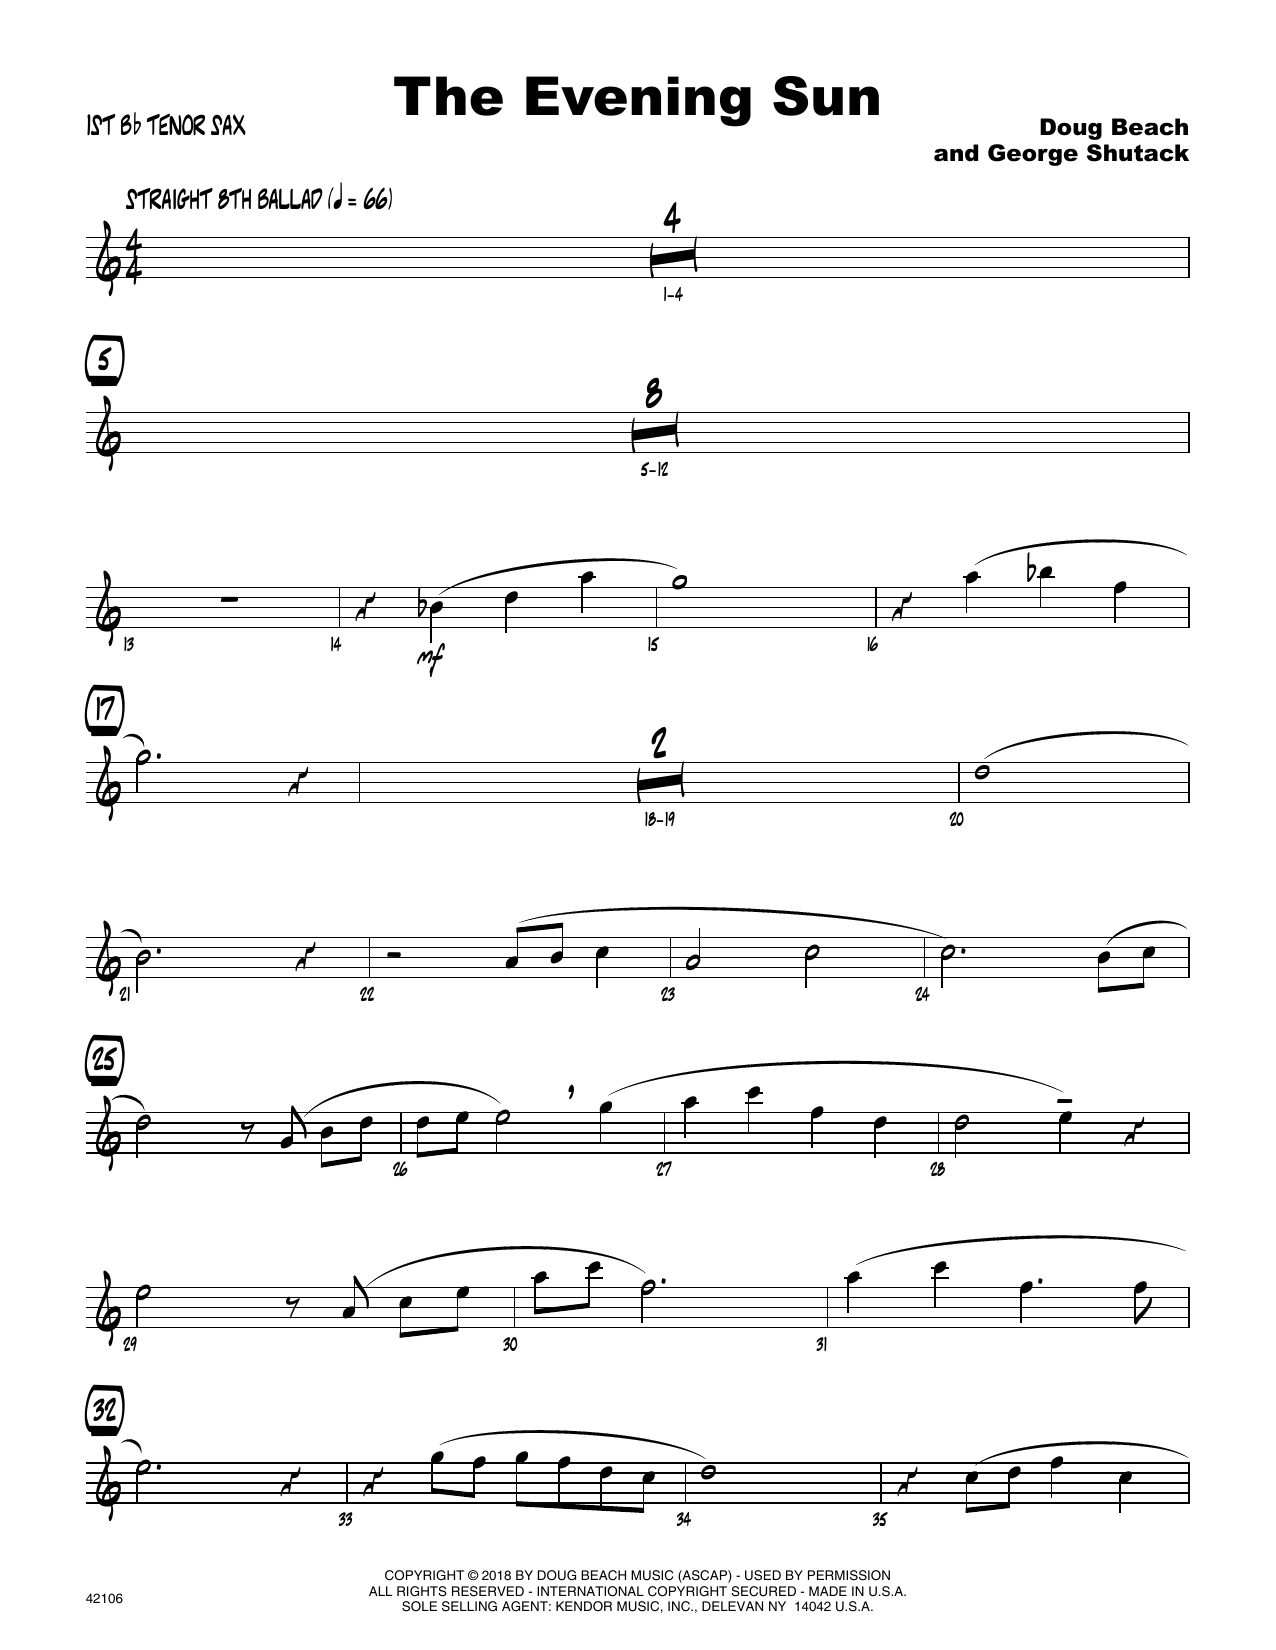 Download Doug Beach & George Shutack The Evening Sun - 1st Tenor Saxophone Sheet Music